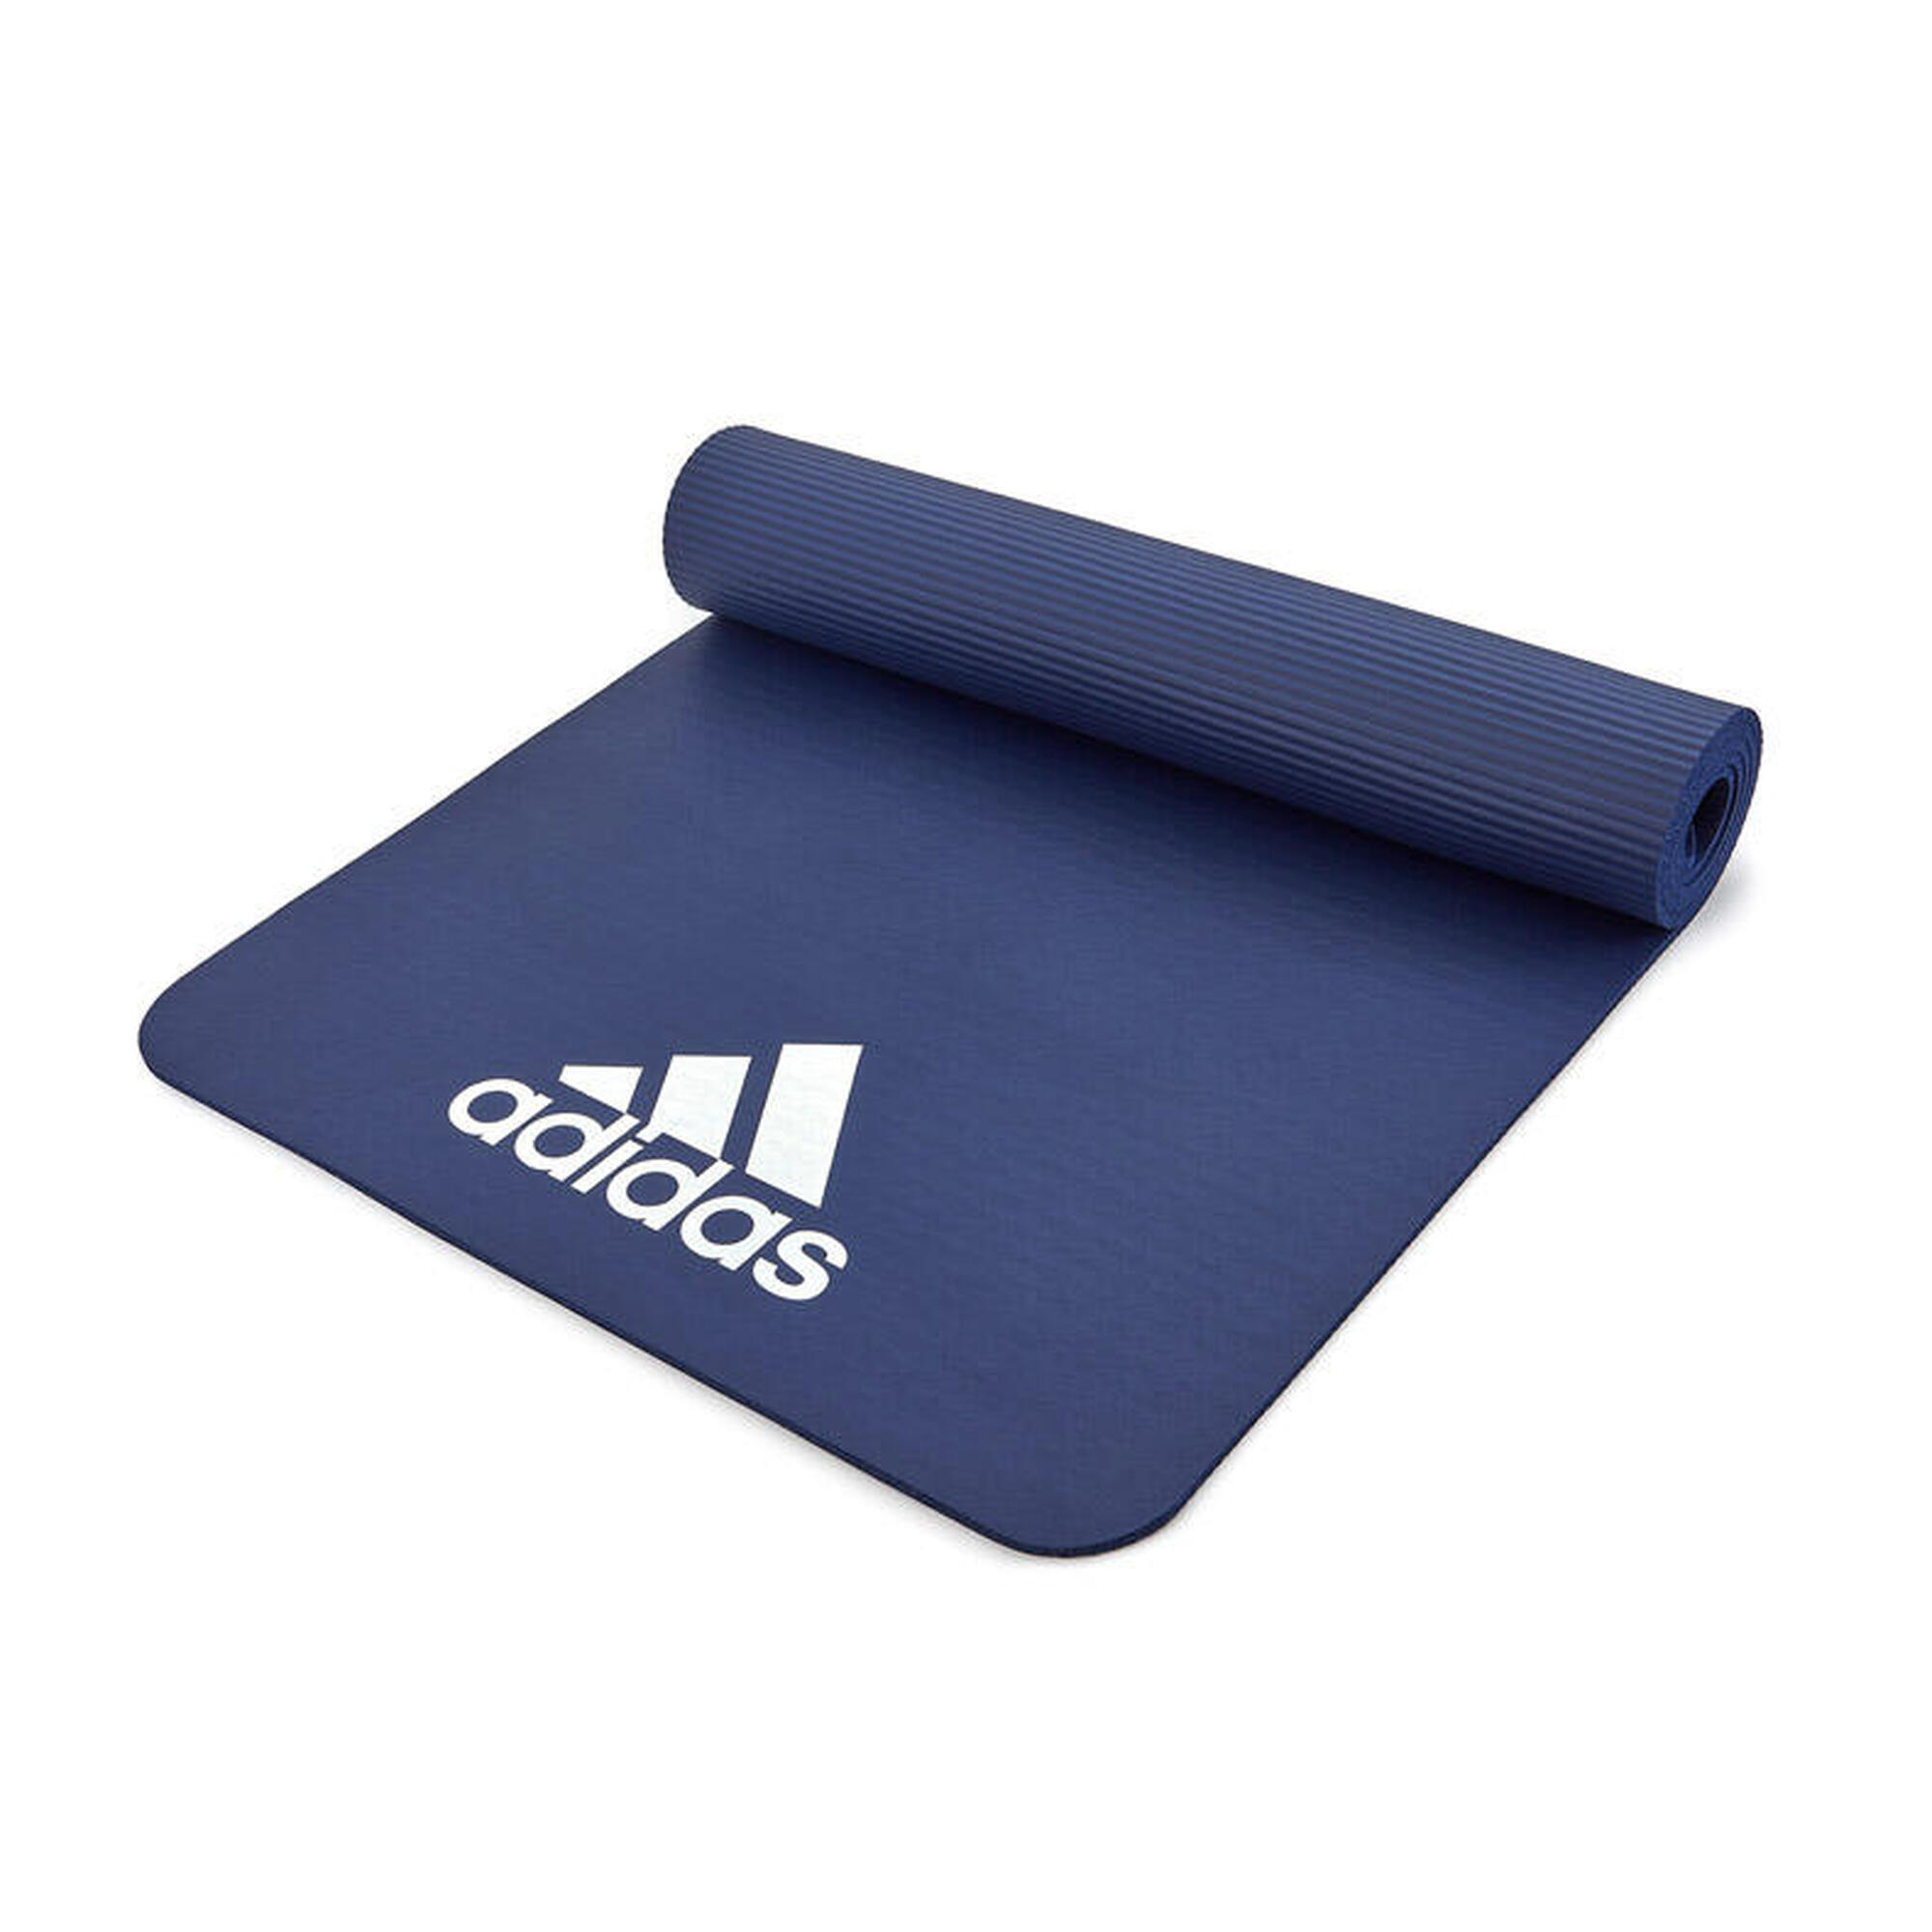 Tappetino di fitness Adidas - 7mm - Blu